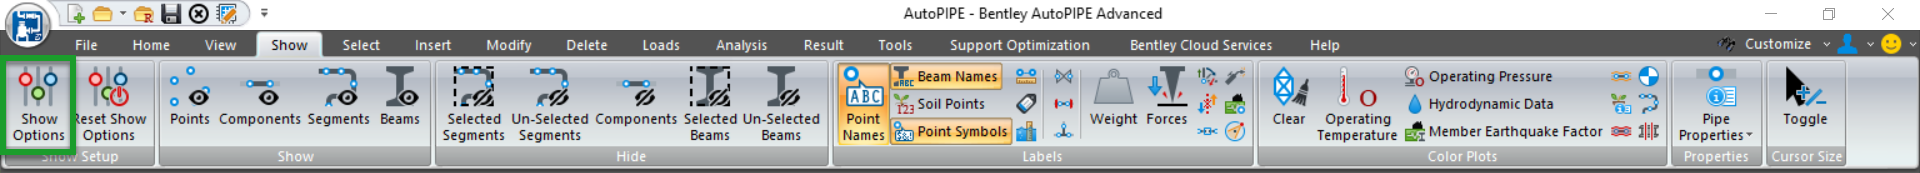 AutoPIPE workflow, AutoPIPE design software